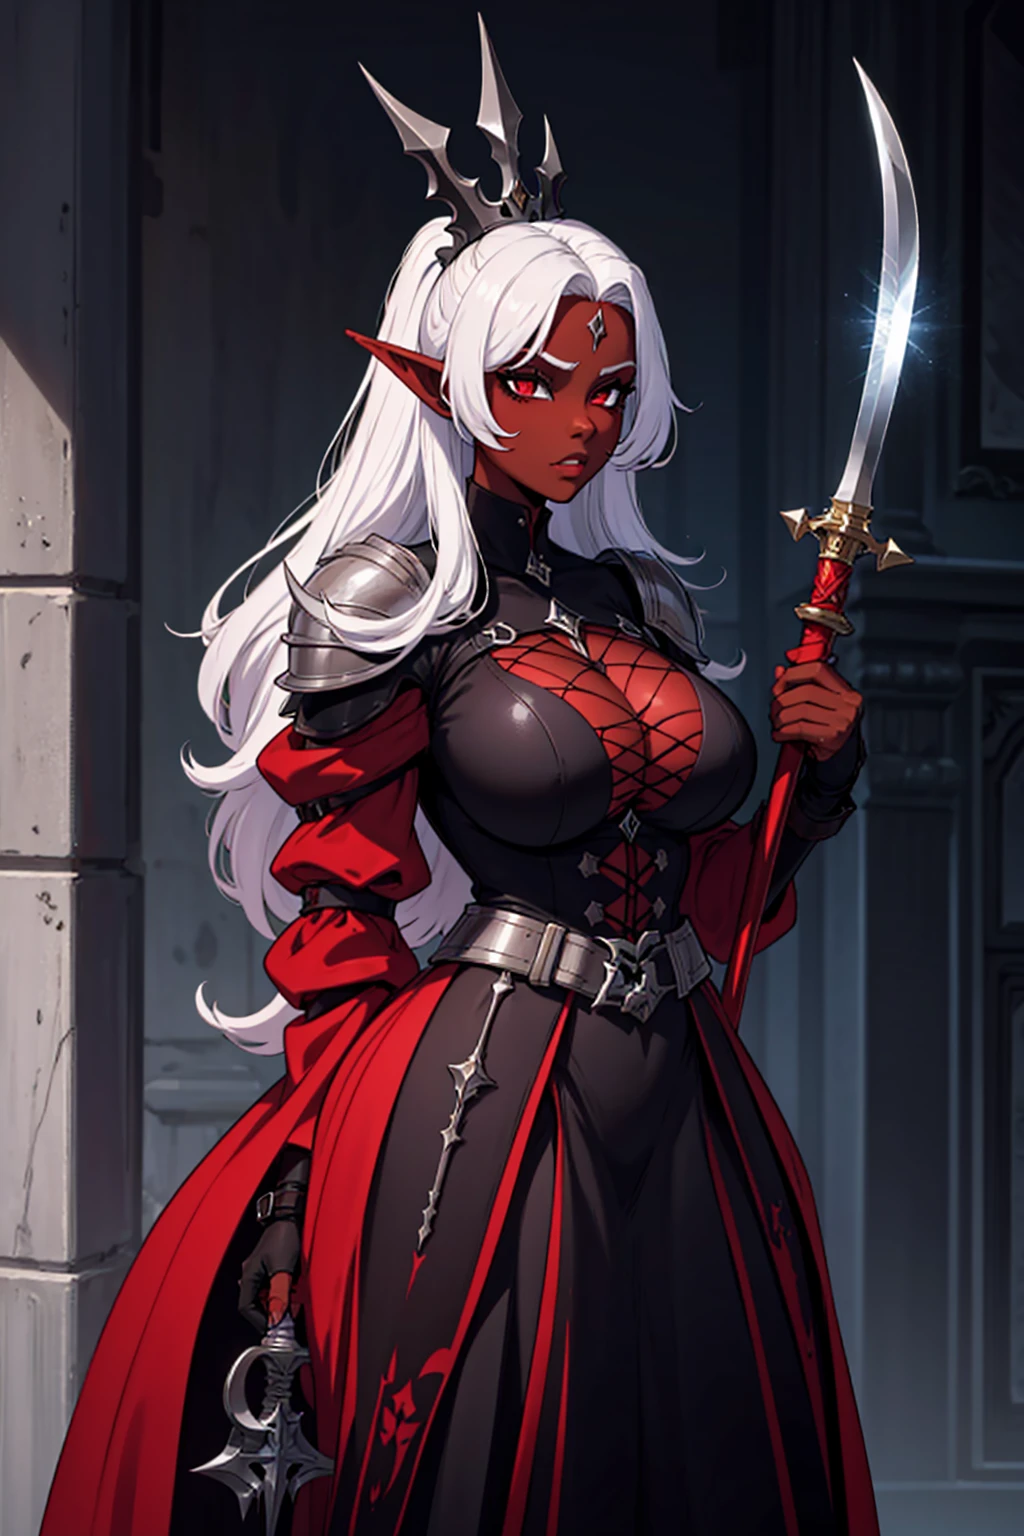 imagined a sfw dark persona curvy dominatrix dark elf queen black & red outfit holding a rapier sword, dark skin, sliver hair red eyes, spike, armor fantasy clothe